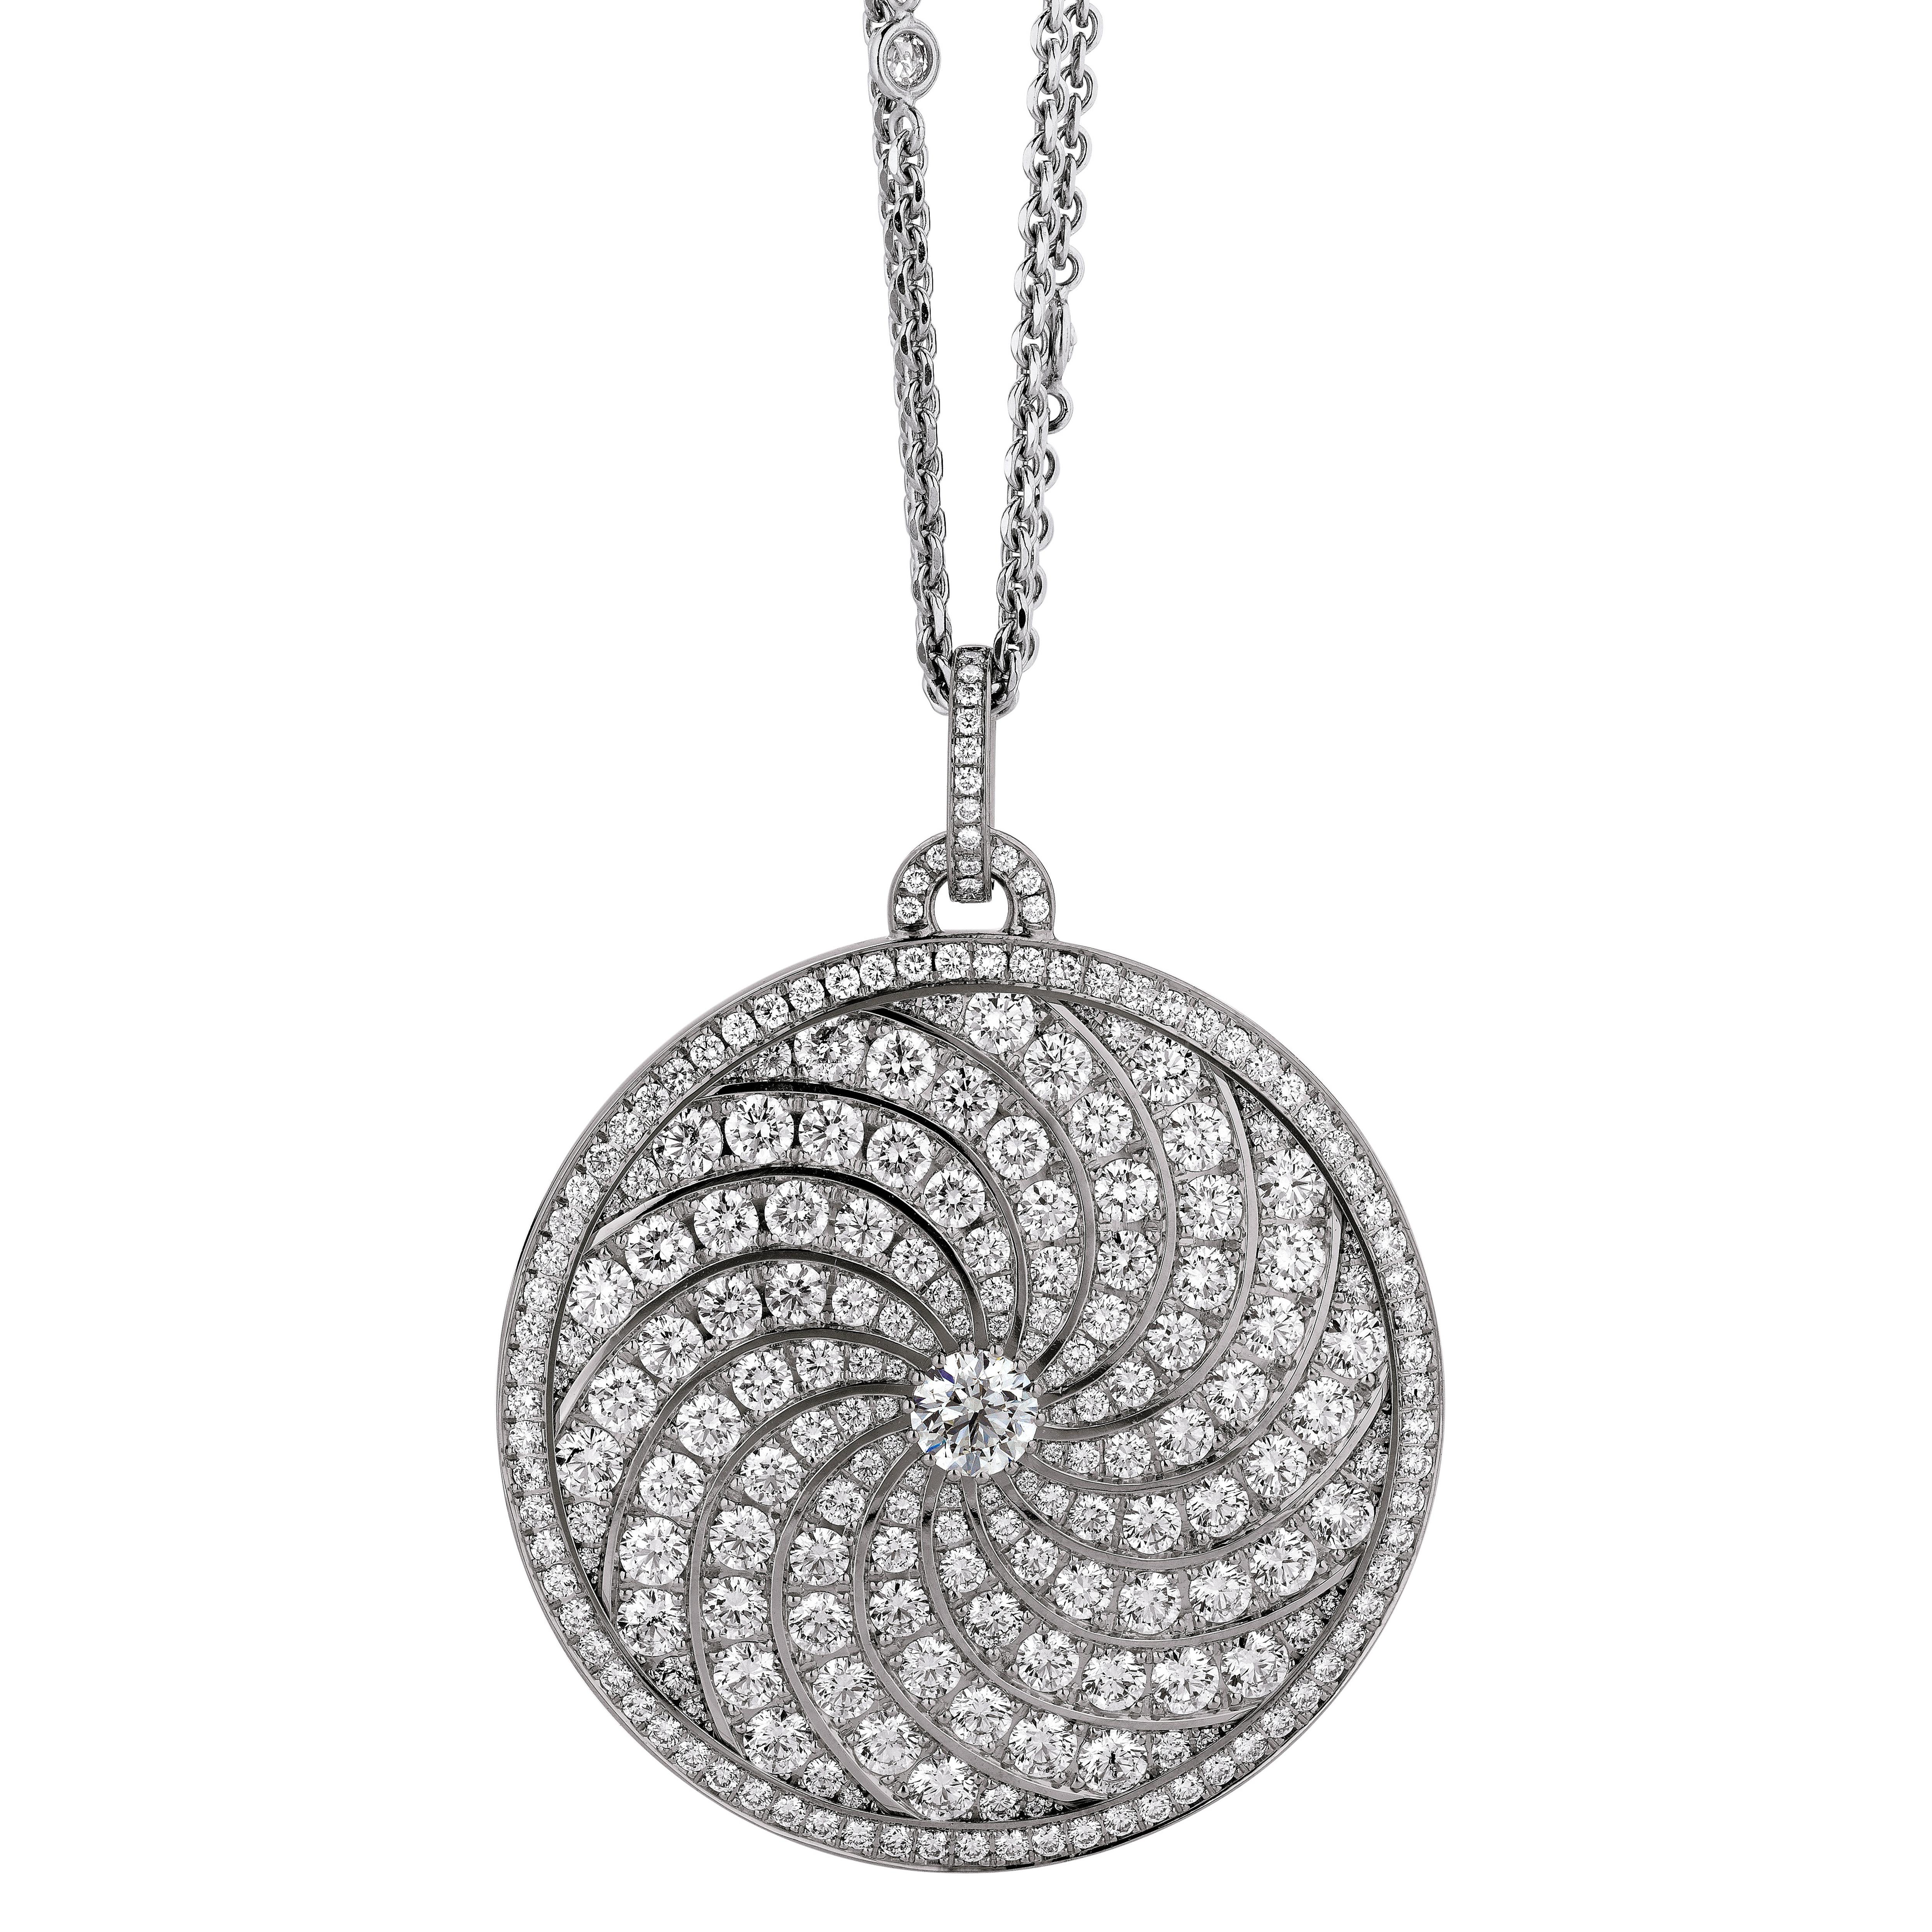 Contemporary Round Pendant Necklace - 18k White Gold - 247 Pavé Diamonds 14.06 ct GVS - 48mm For Sale